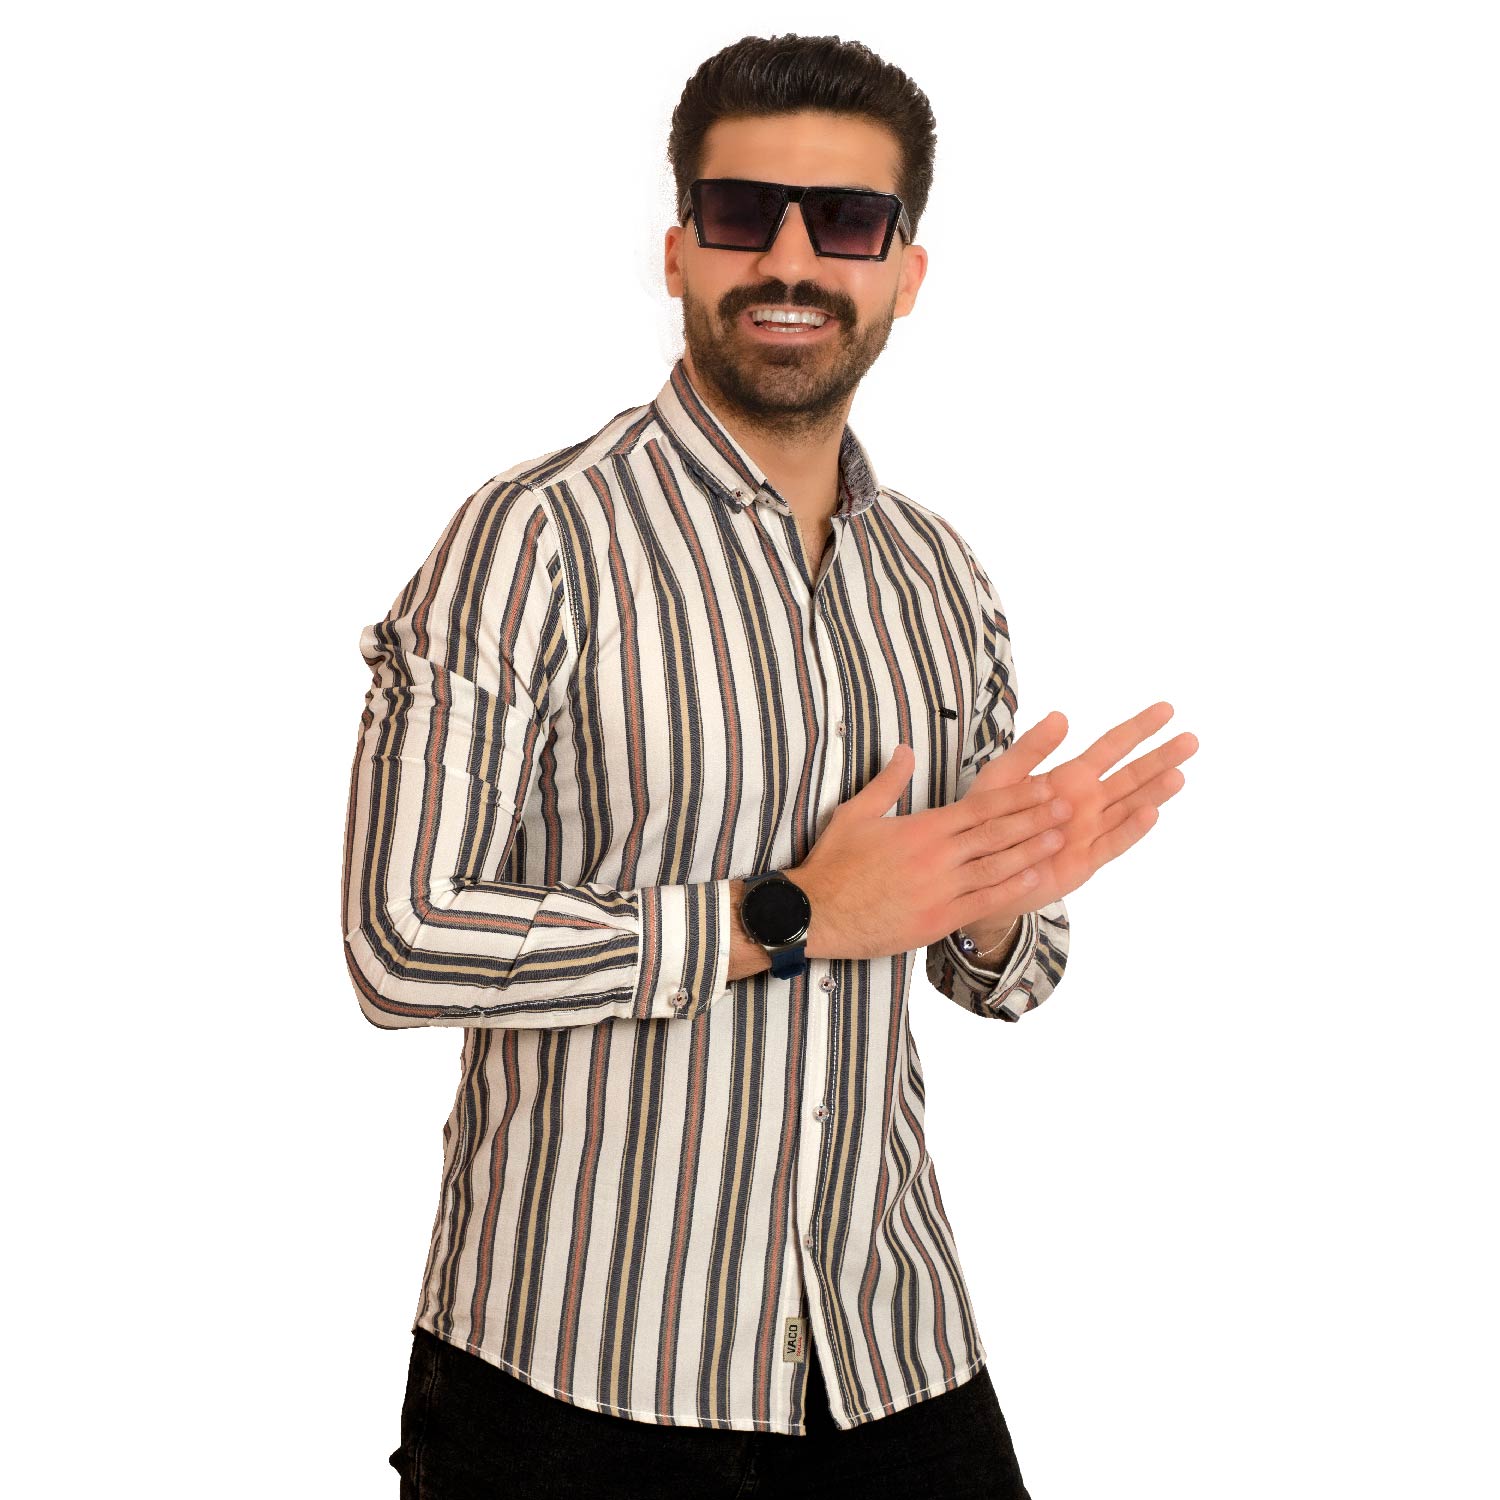 23GM-14-7-154-21-قميص قطن مقلم باكمام طويله Long-Sleeve-Shirt, Striped Shirt, قميص كم طويل, قميص مقلم, مقلم رجالي, Pukkastyle